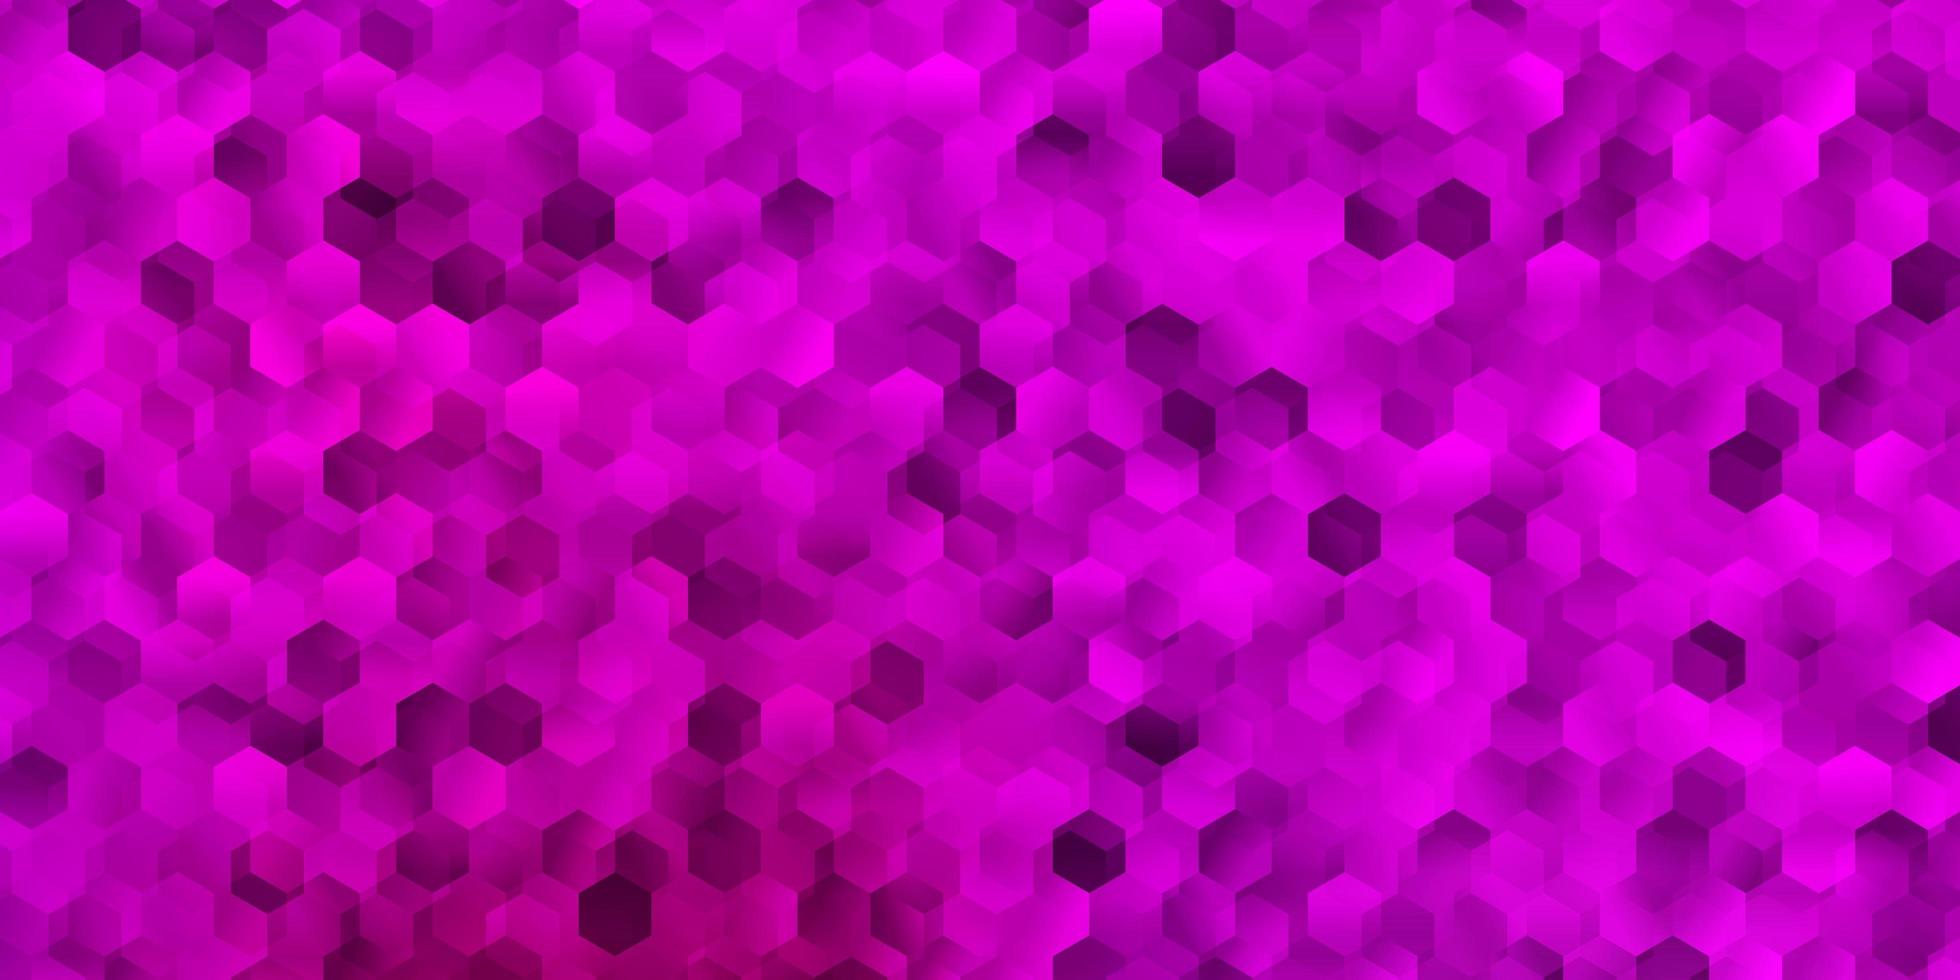 plantilla de vector rosa claro en un estilo hexagonal.